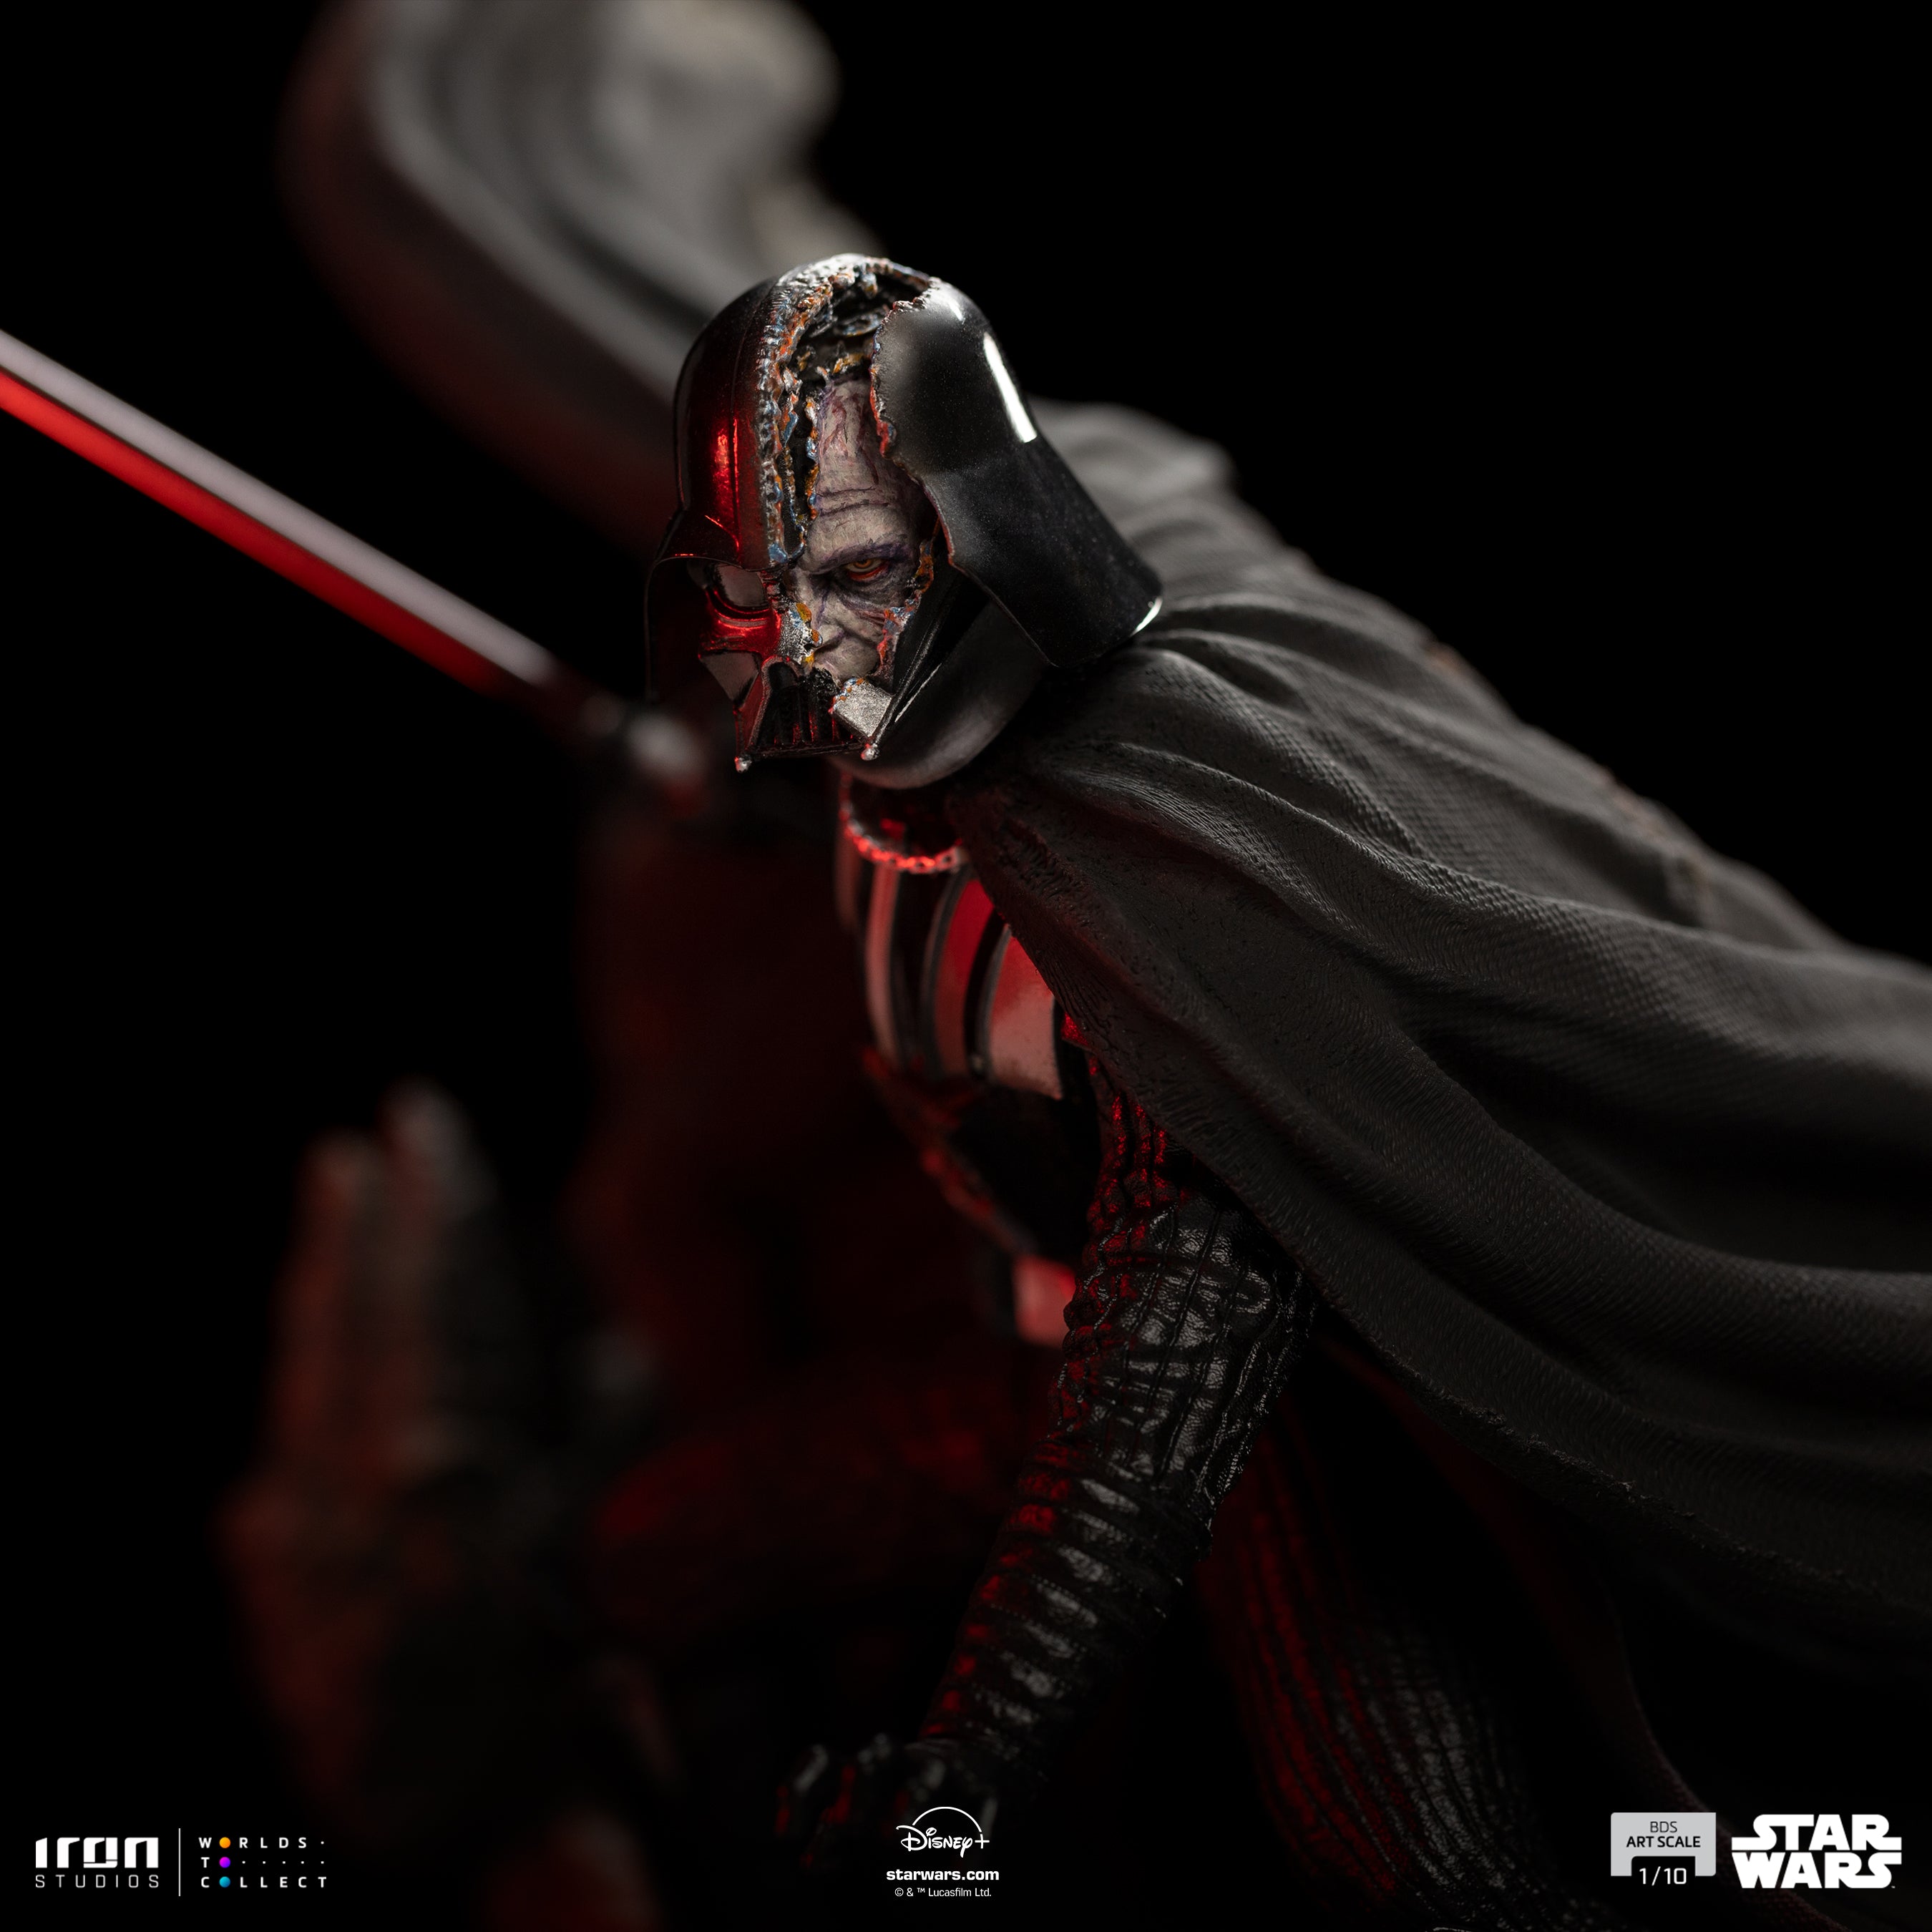 IRON Studios: Star Wars Obiwan Kenobi - Darth Vader BDS Escala De Arte 1/10